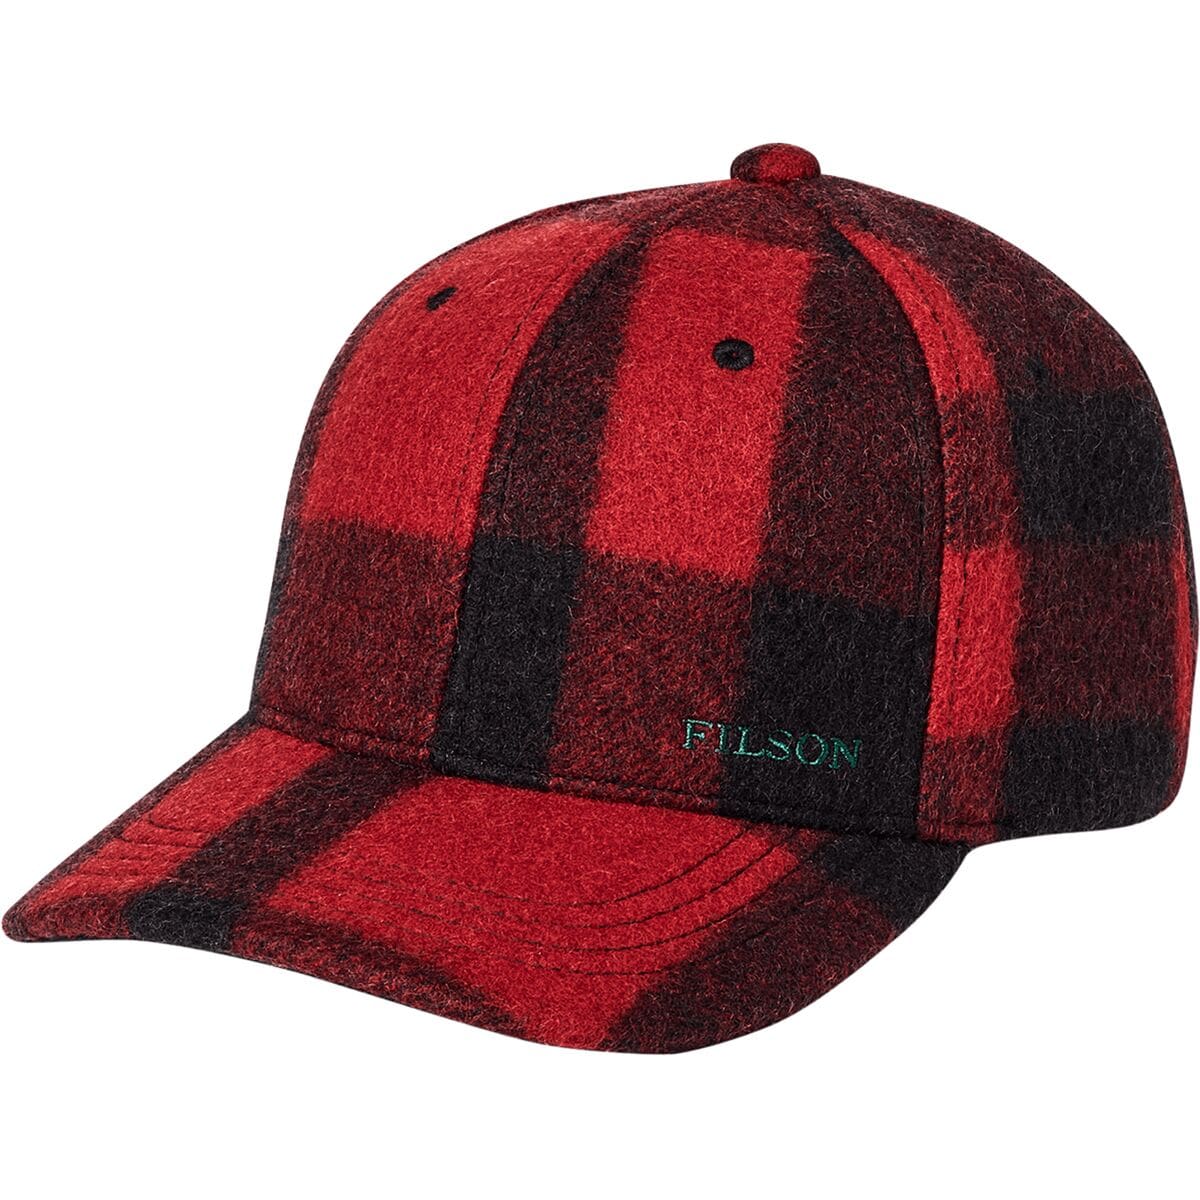 Шерстяная кепка лесоруба Filson, цвет red/black heritage